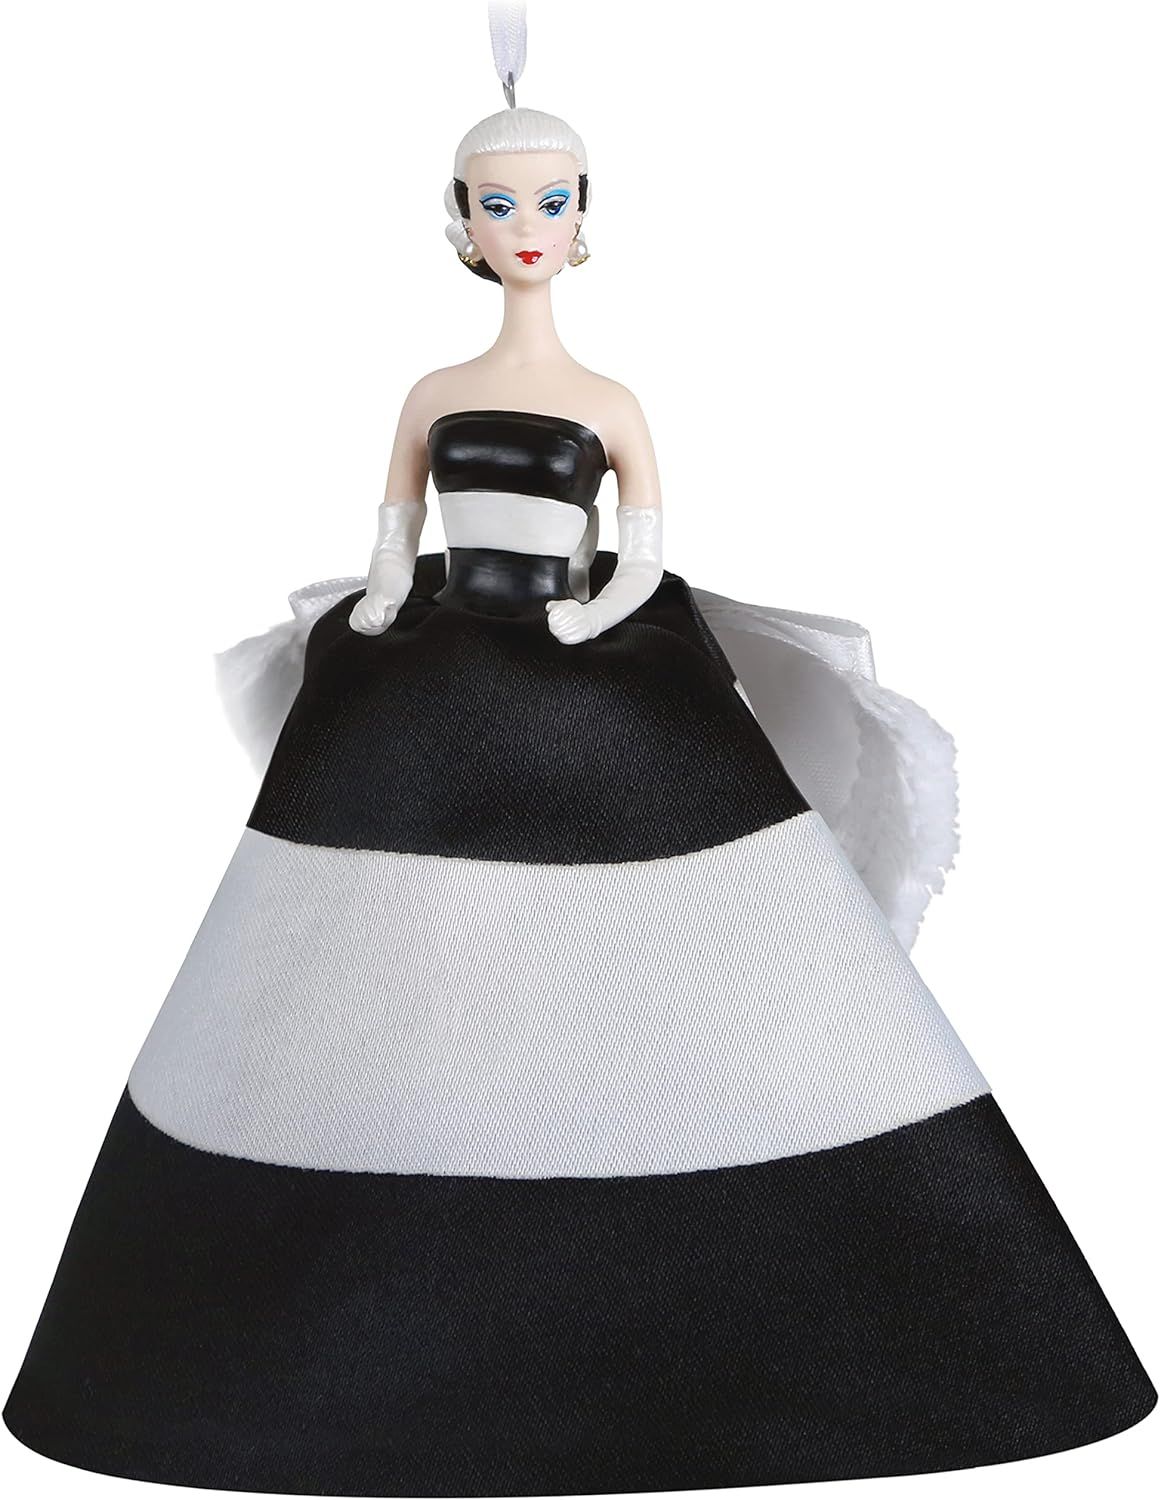 Hallmark Keepsake Christmas Ornament 2021, Barbie Black & White Forever, Porcelain and Fabric | Amazon (US)